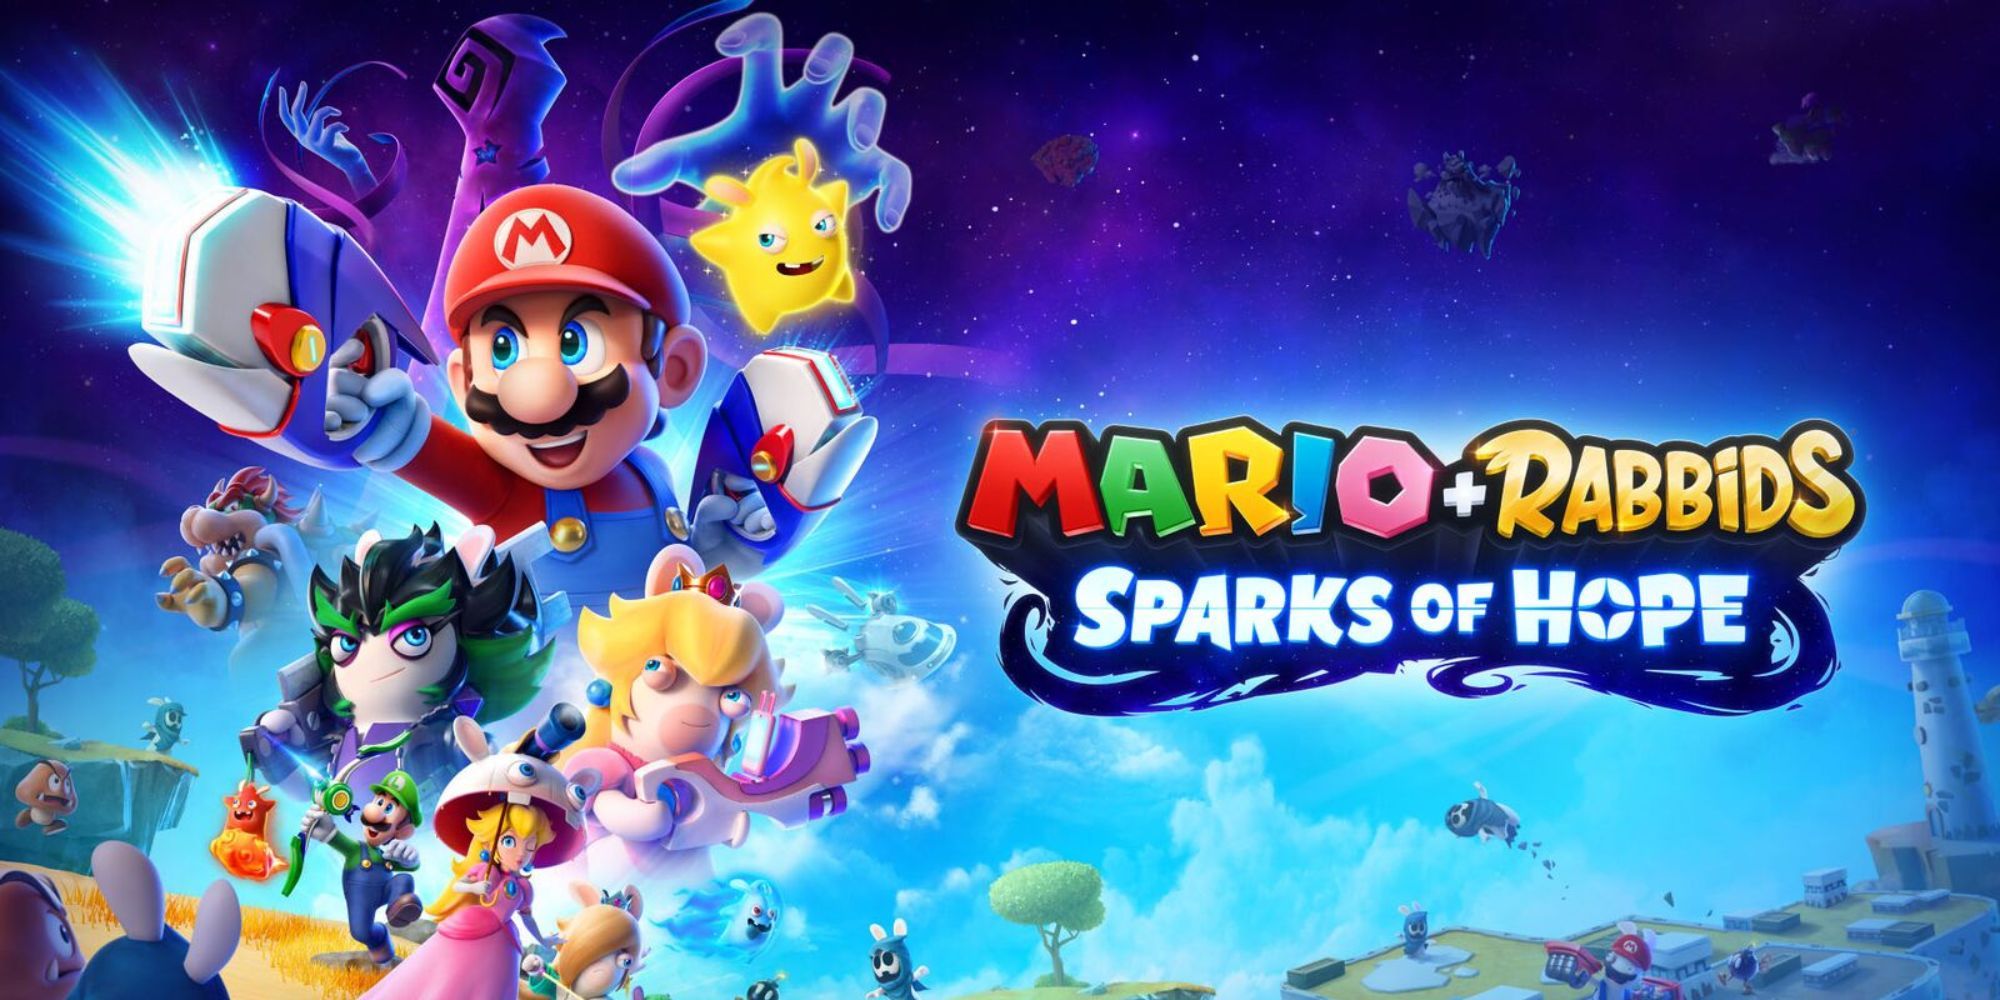 Mario+Rabbid's Sparks of Hope